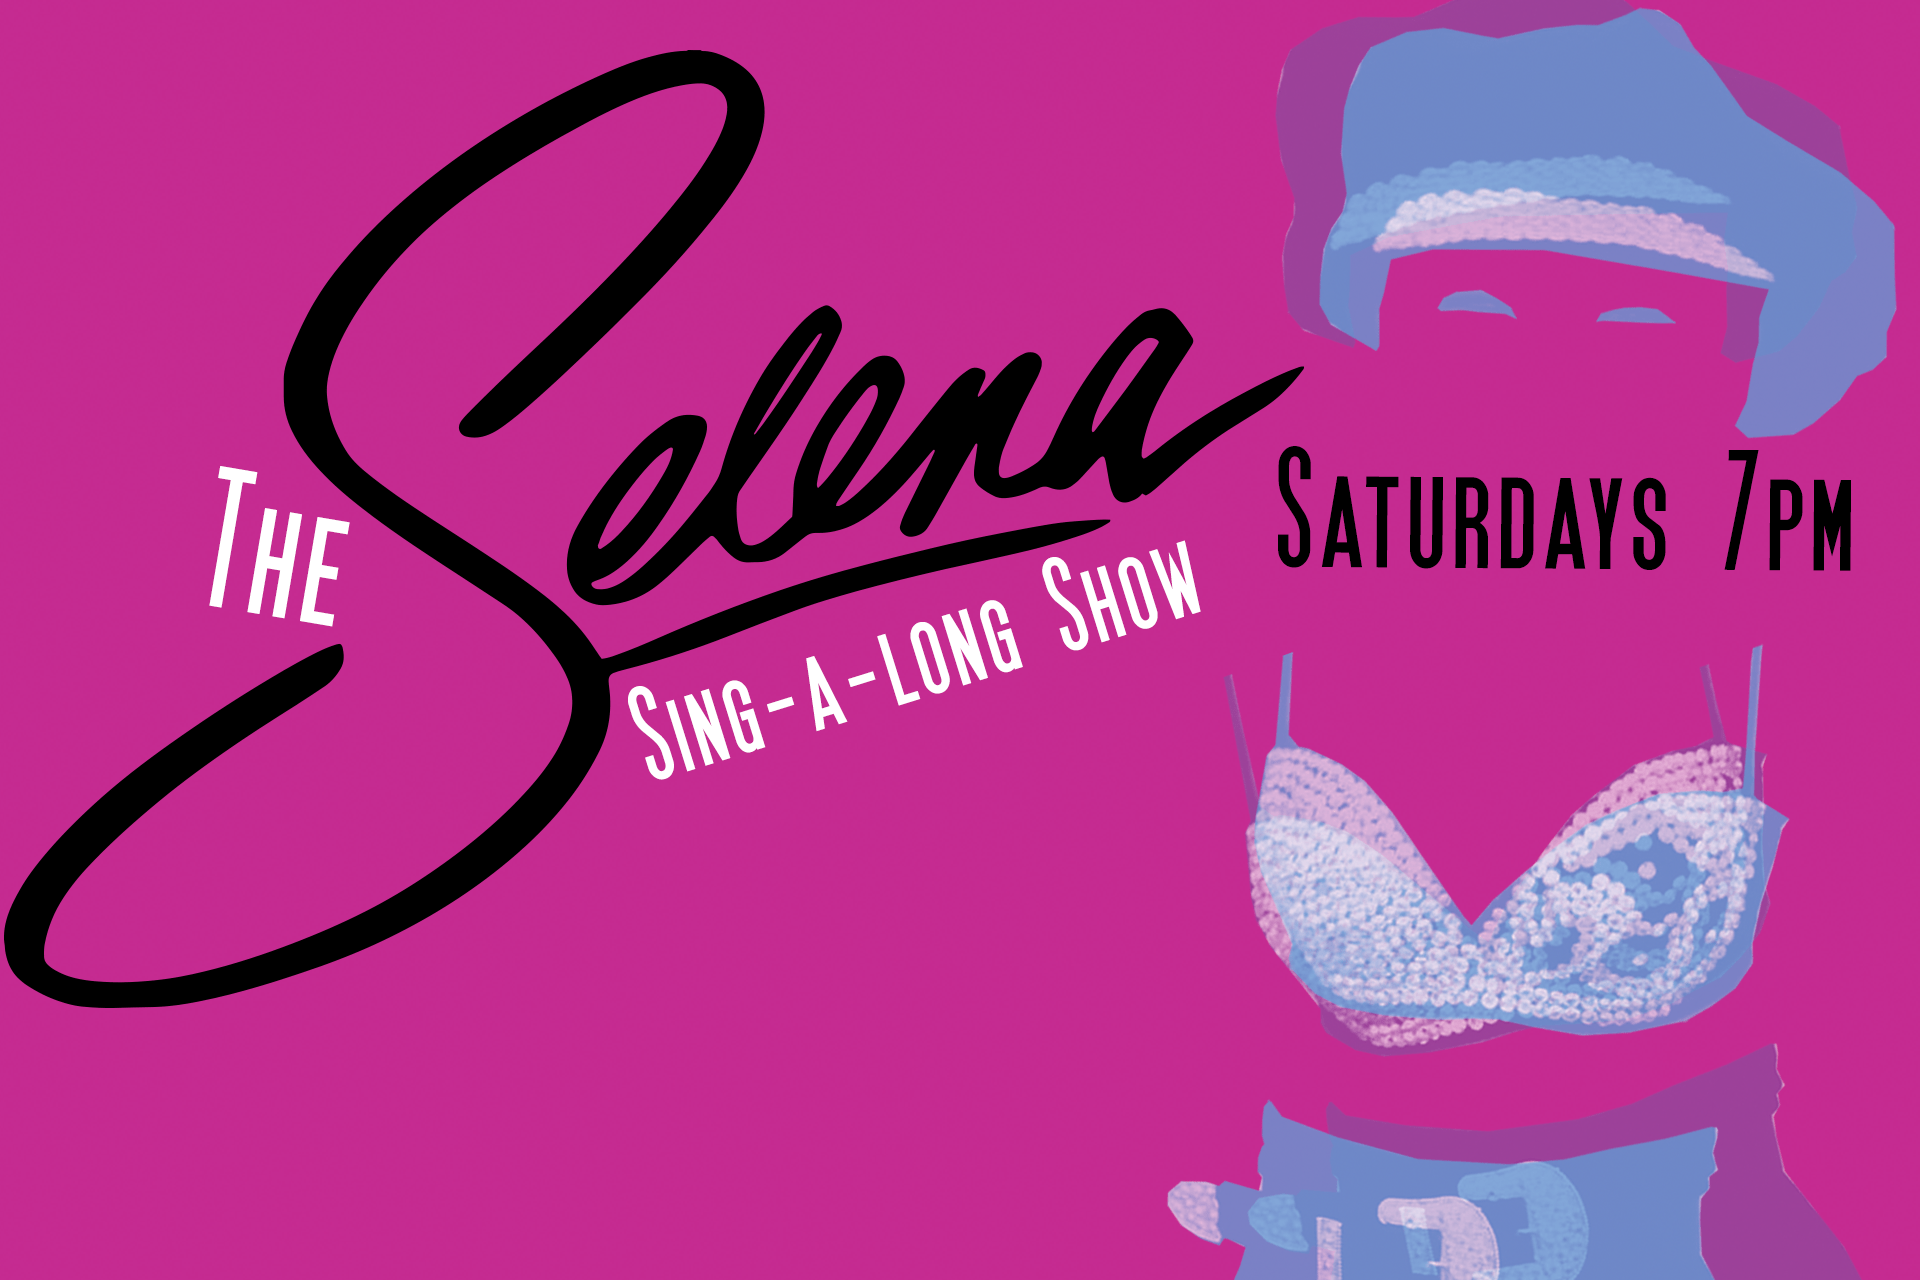 The Selena Sing-a-long Show